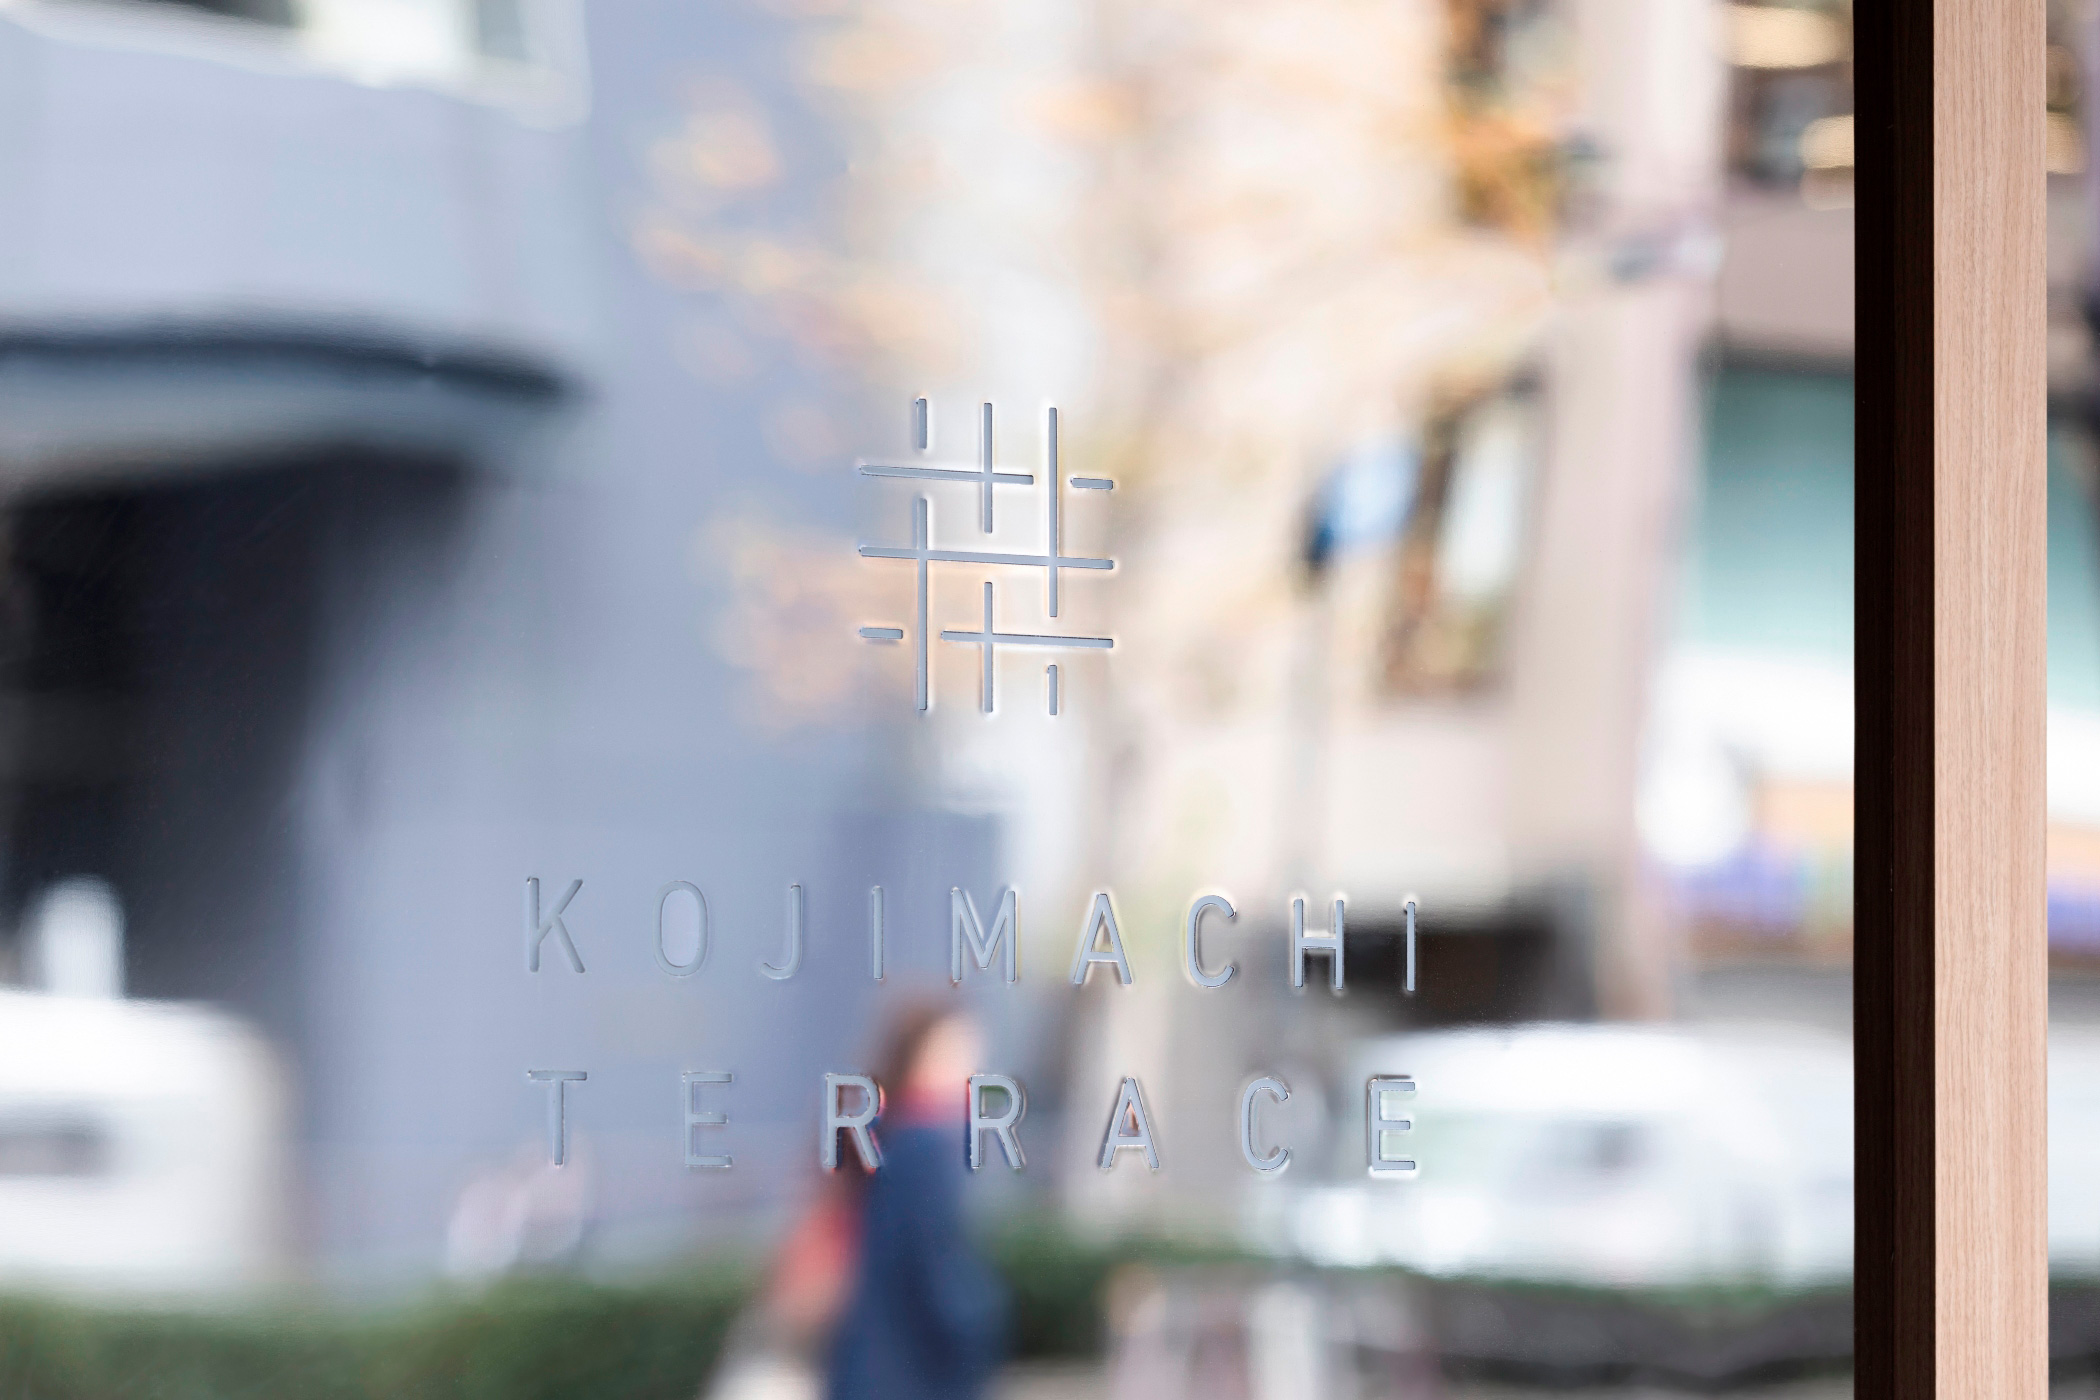 Kojimachi Terrace